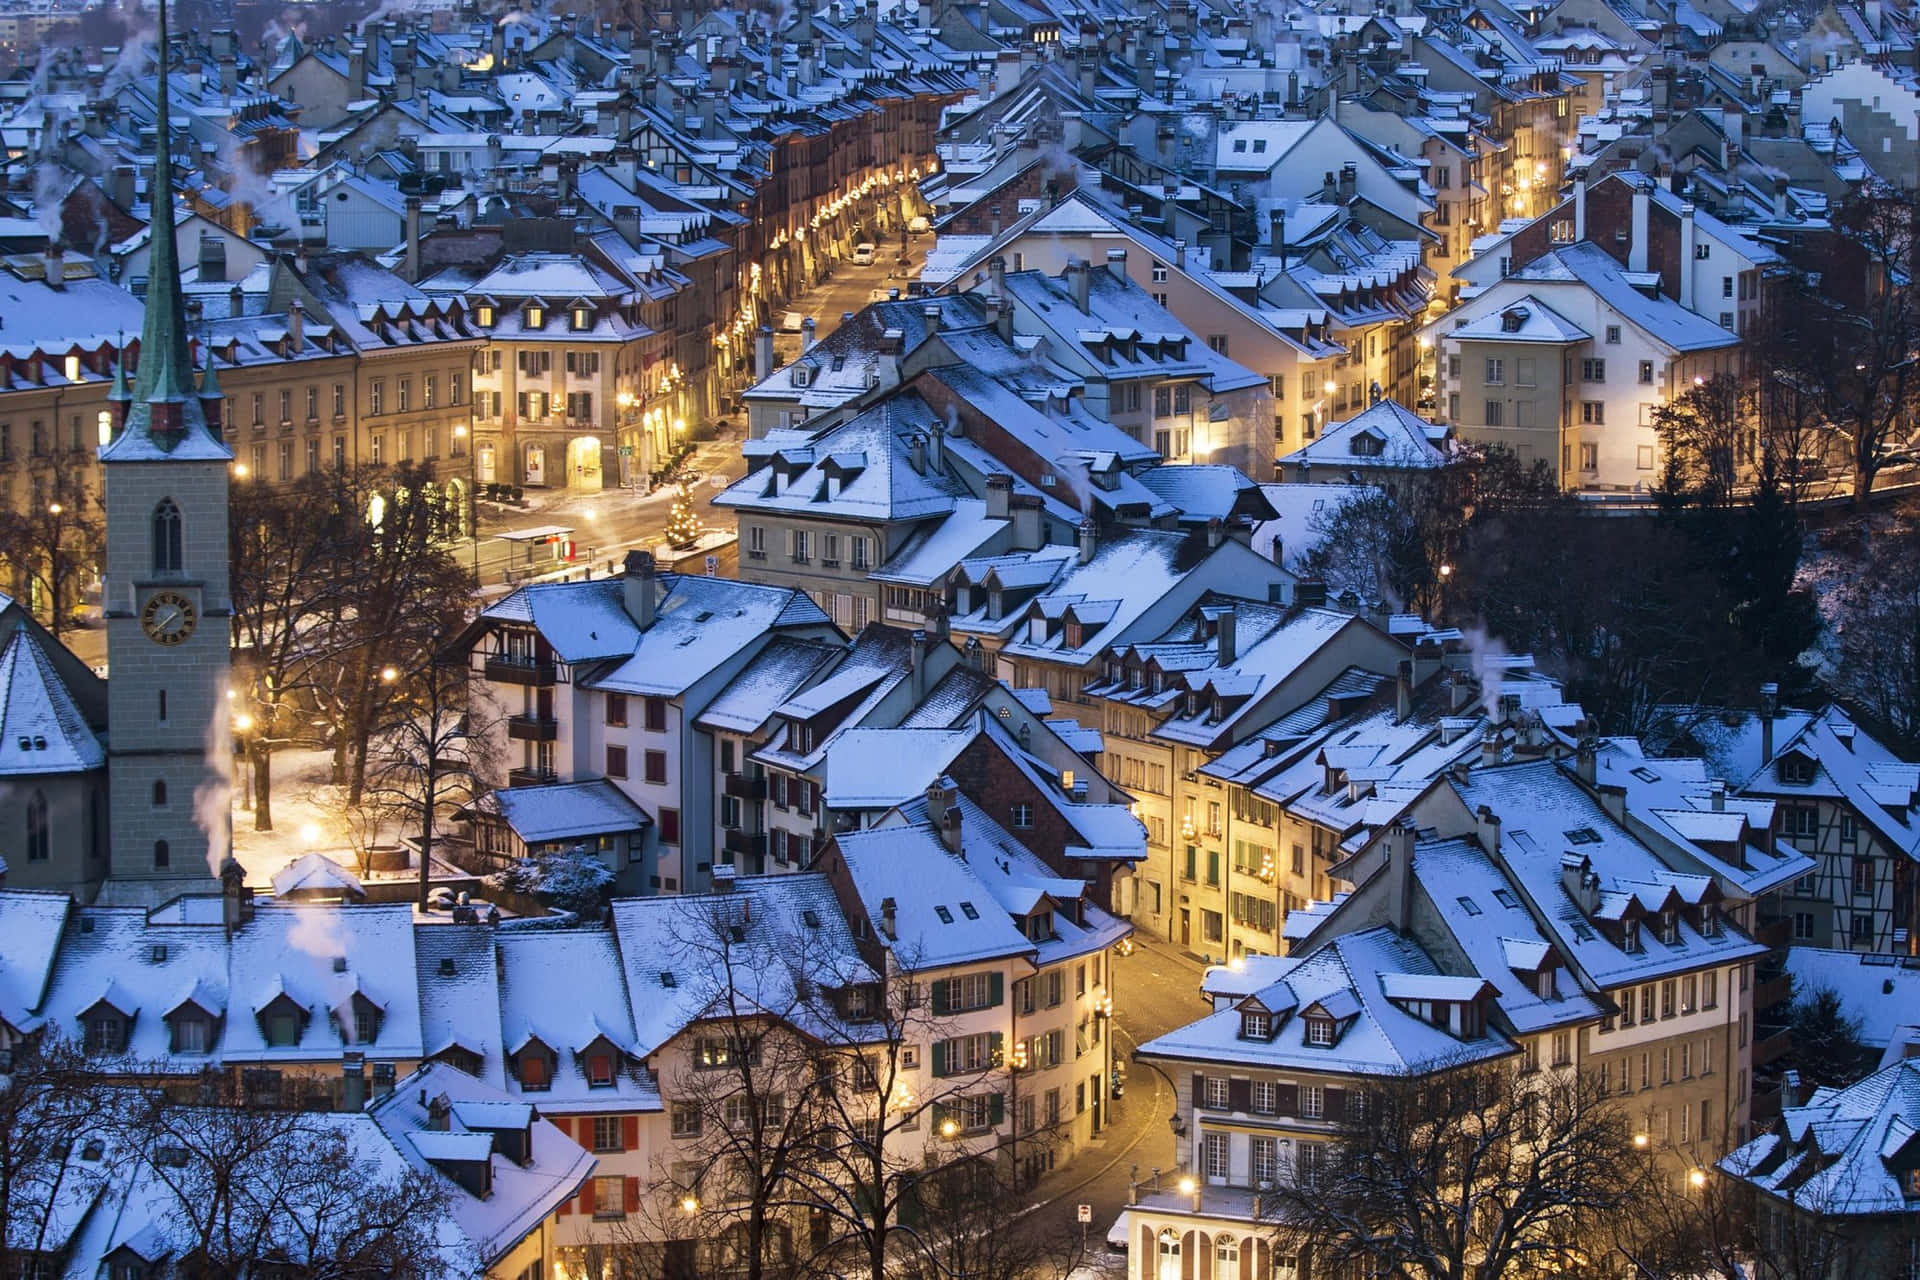 Bern Winter Night Aerial View Wallpaper